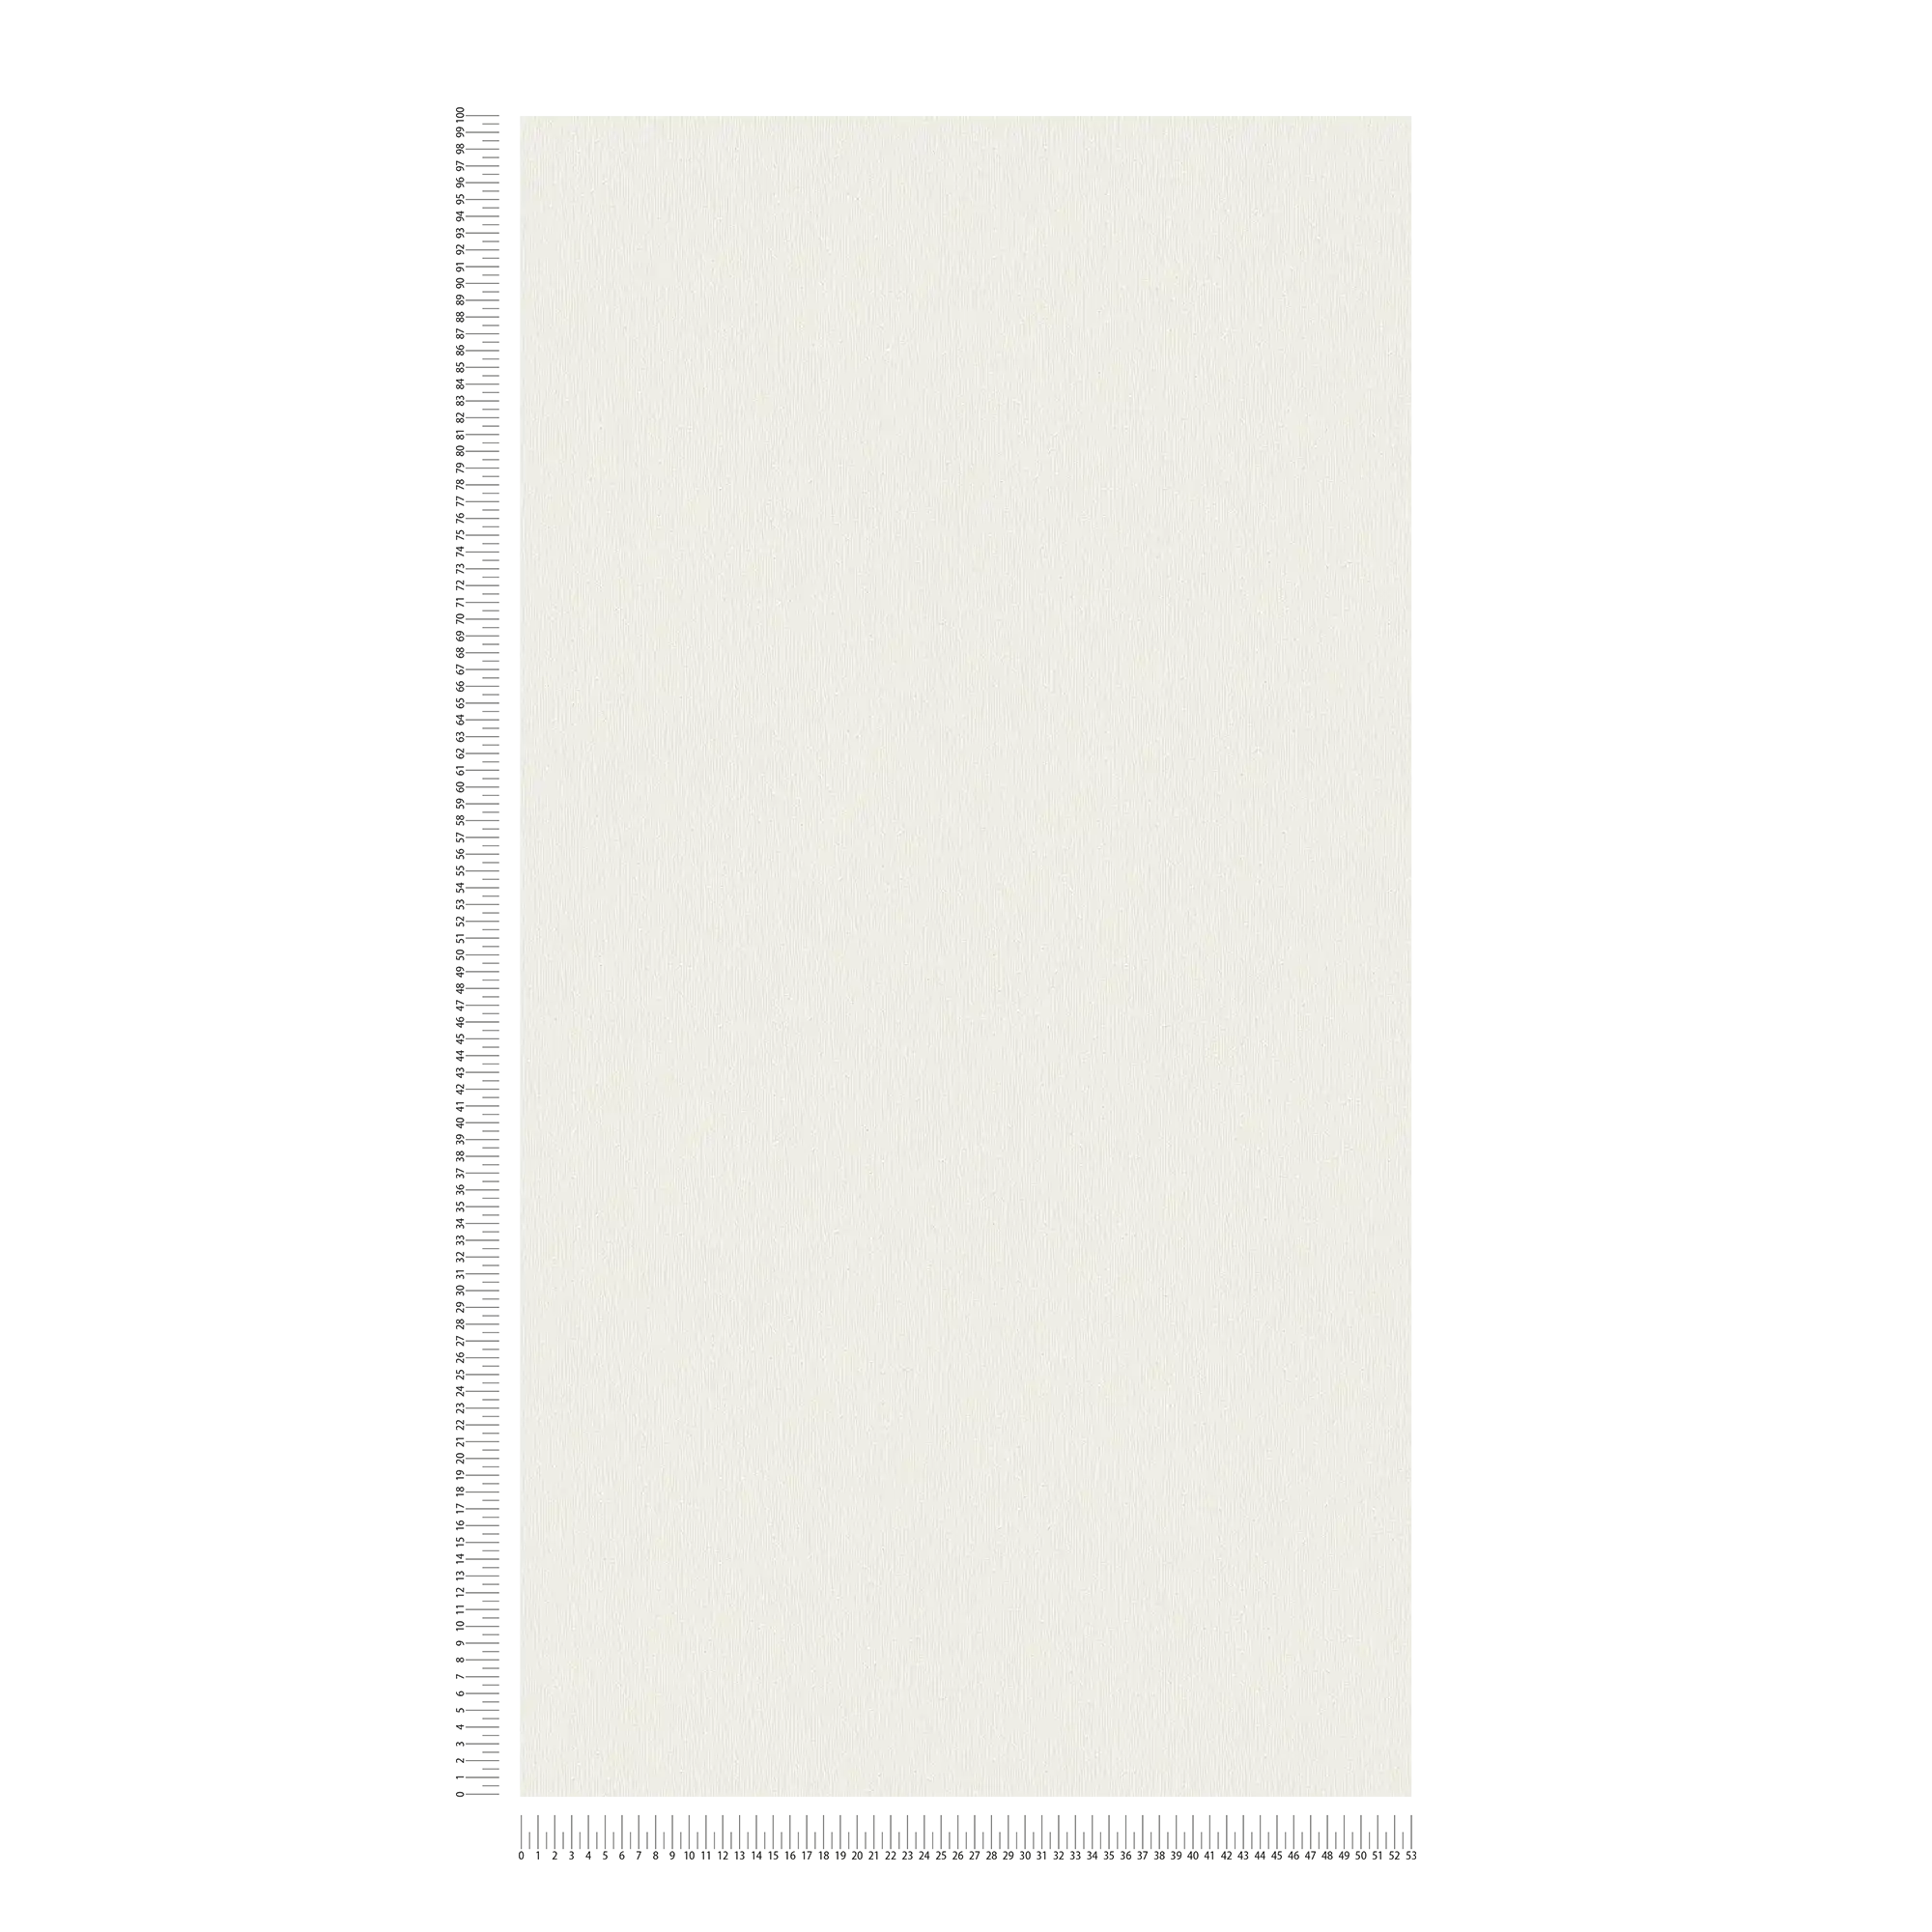             Carta da parati in tessuto non tessuto bianca con motivi naturali tono su tono
        